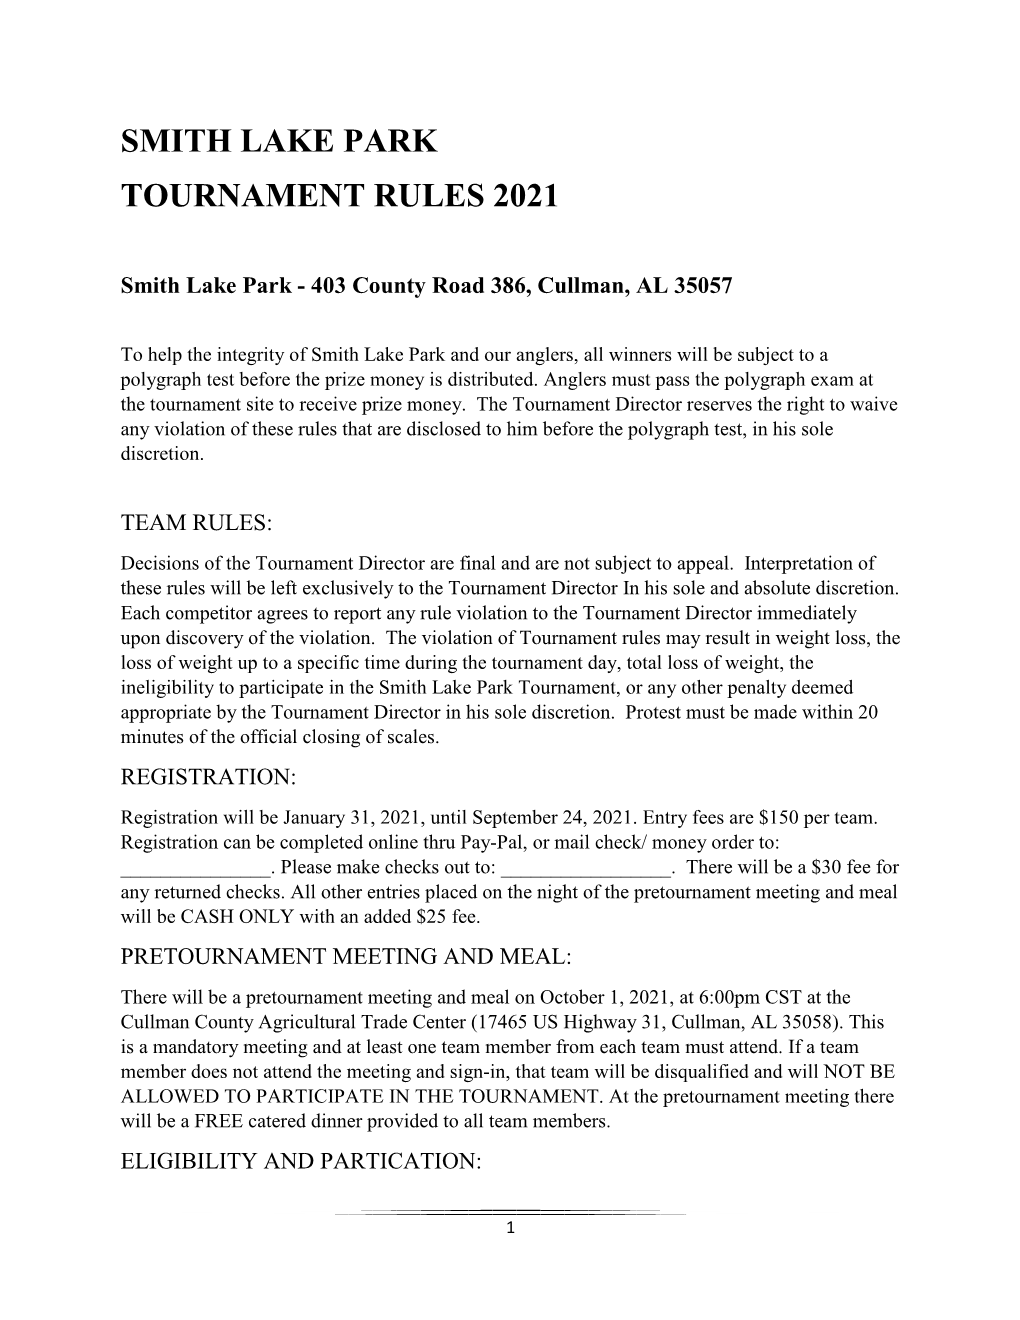 Smith Lake Park Tournament Rules 2021